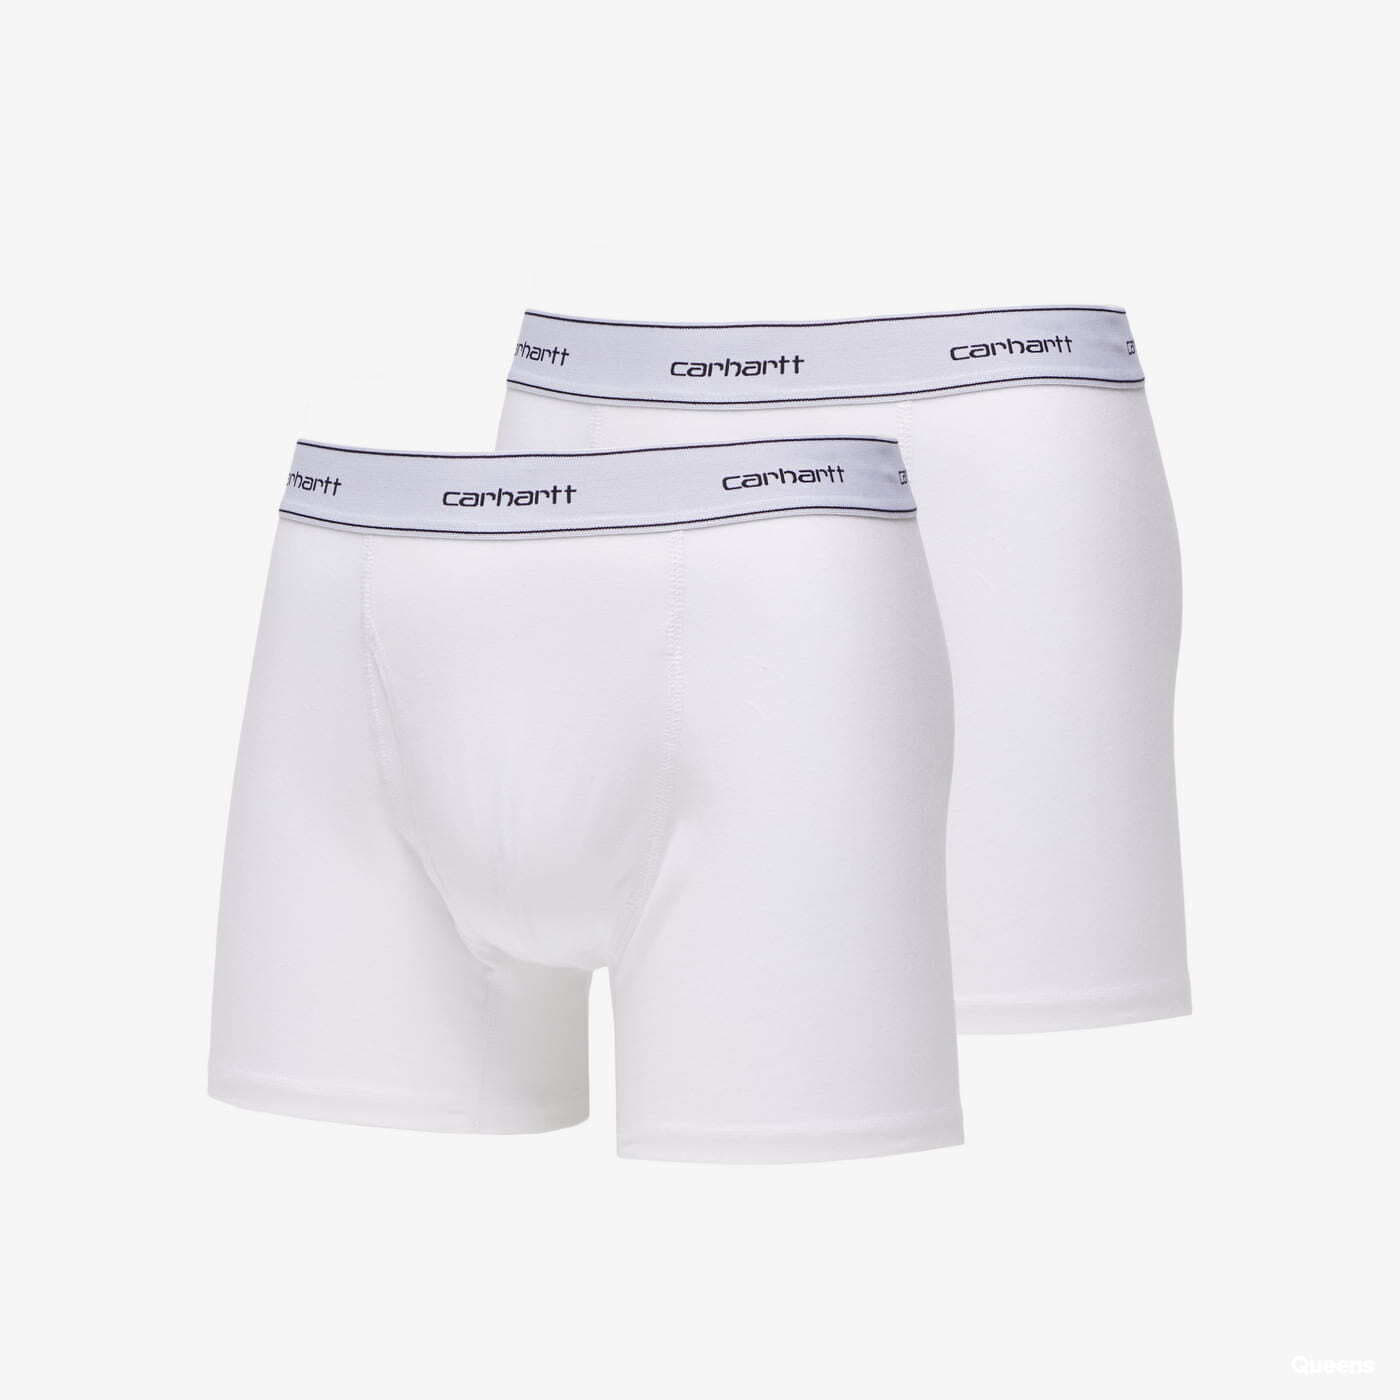 Boxer shorts Carhartt WIP Cotton Trunks 2-Pack White